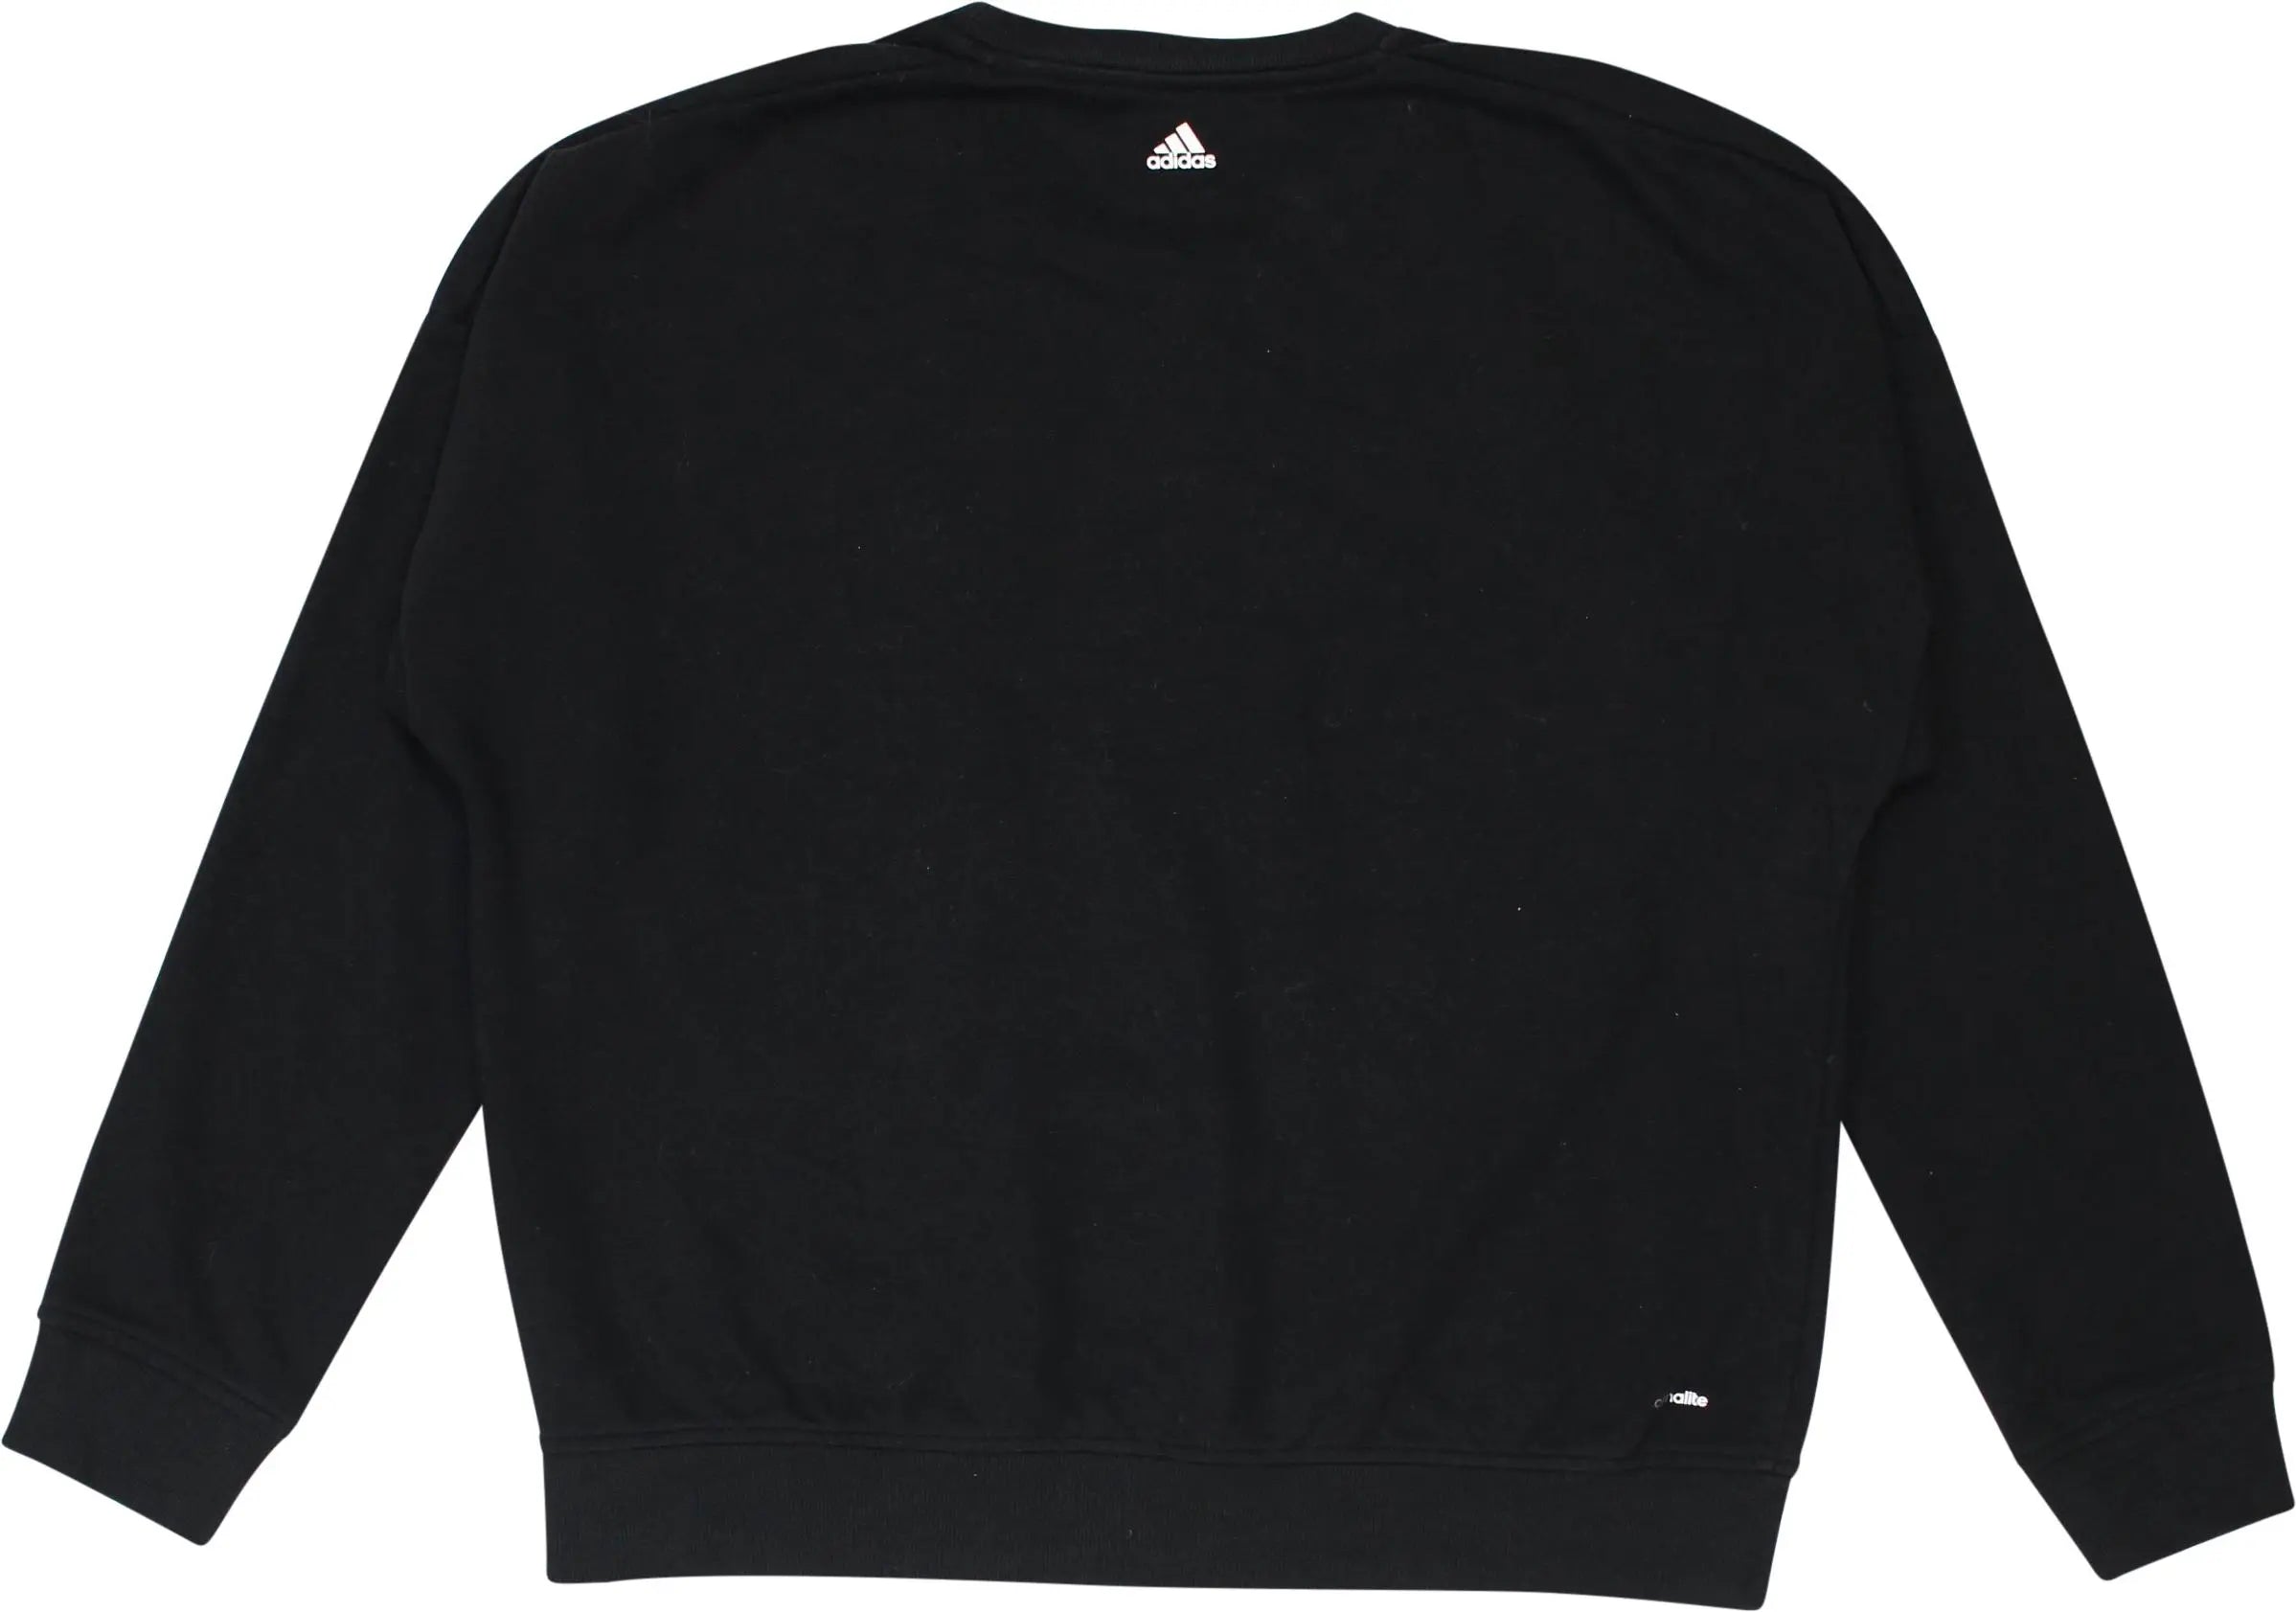 Adidas - Adidas Crewneck Sweatshirt- ThriftTale.com - Vintage and second handclothing